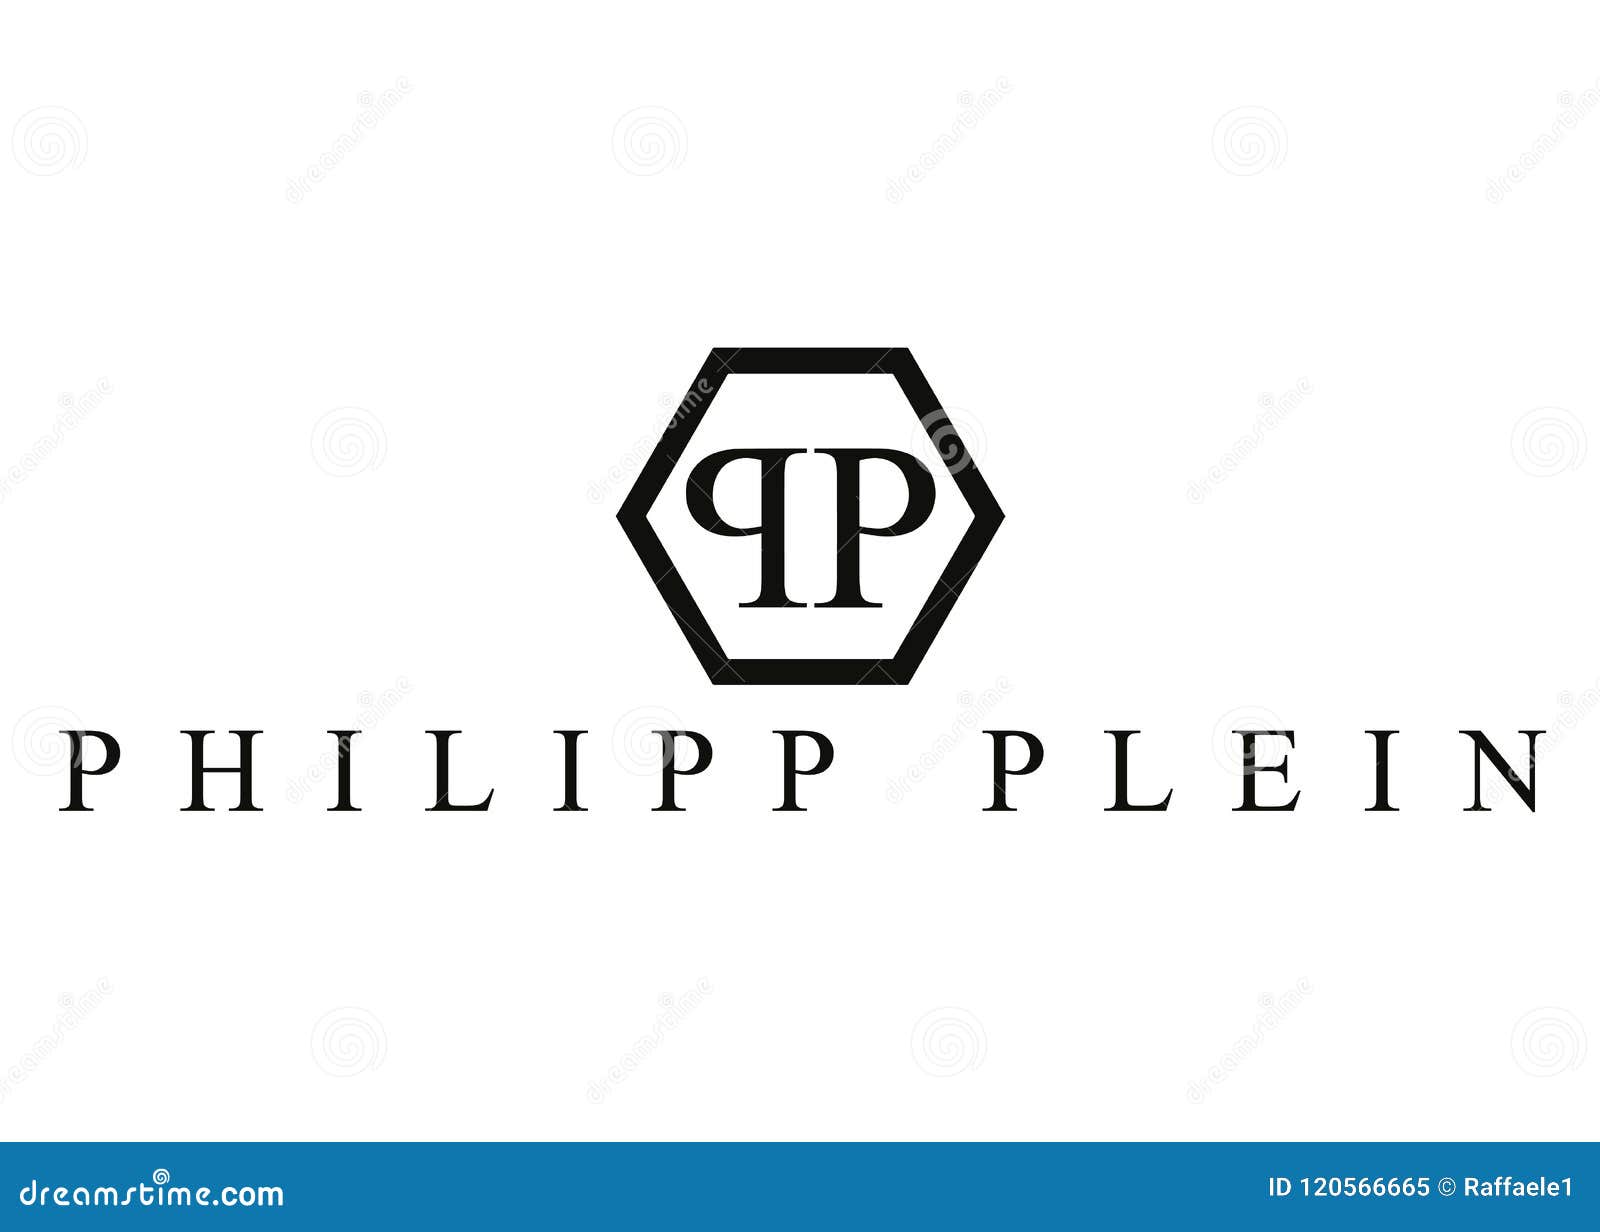 Philipp Plein Skull And Crossbones Logo Black Underwear T-Shirt :  Amazon.co.uk: Fashion